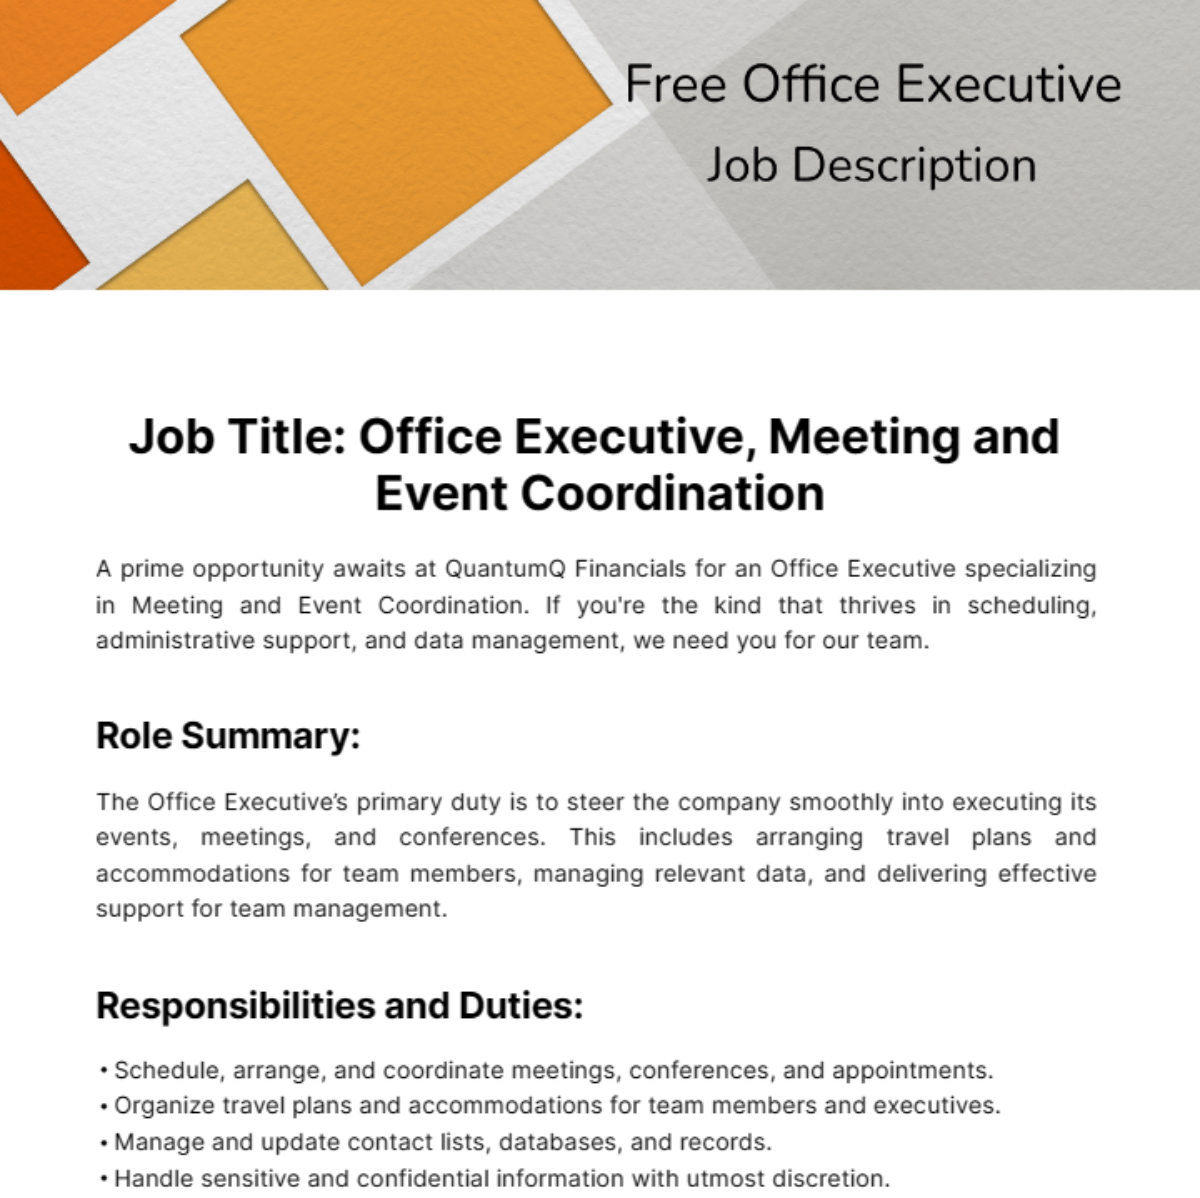 Free Office Executive Job Description Template